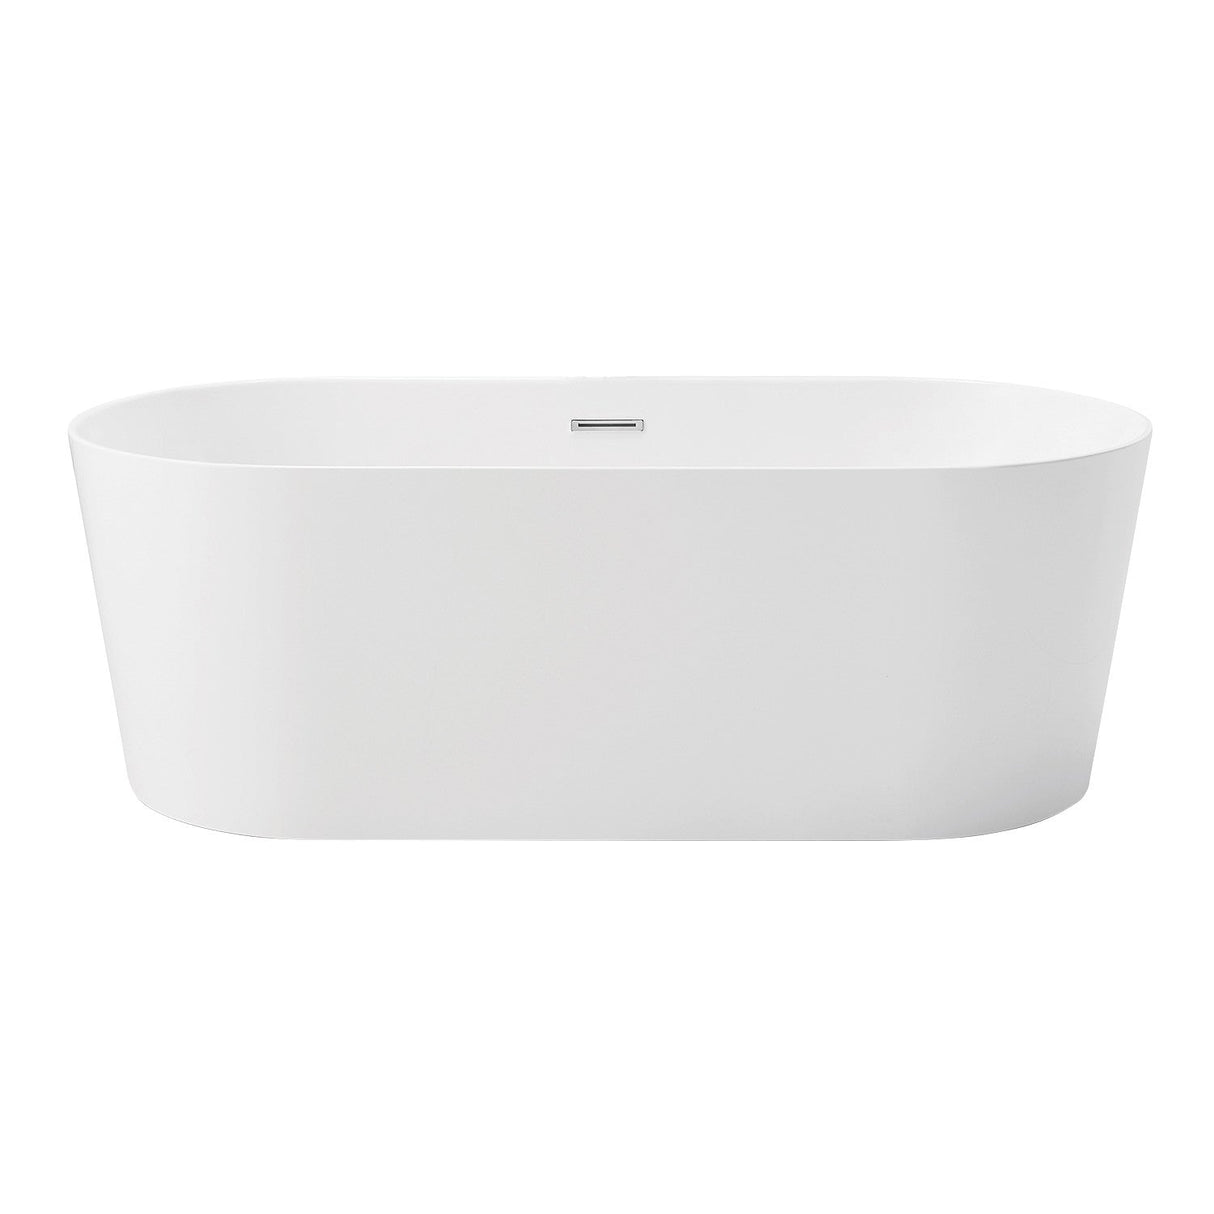 Aqua Eden VTOV593023 59-Inch Acrylic Freestanding Tub with Center Drain Hole, Glossy White